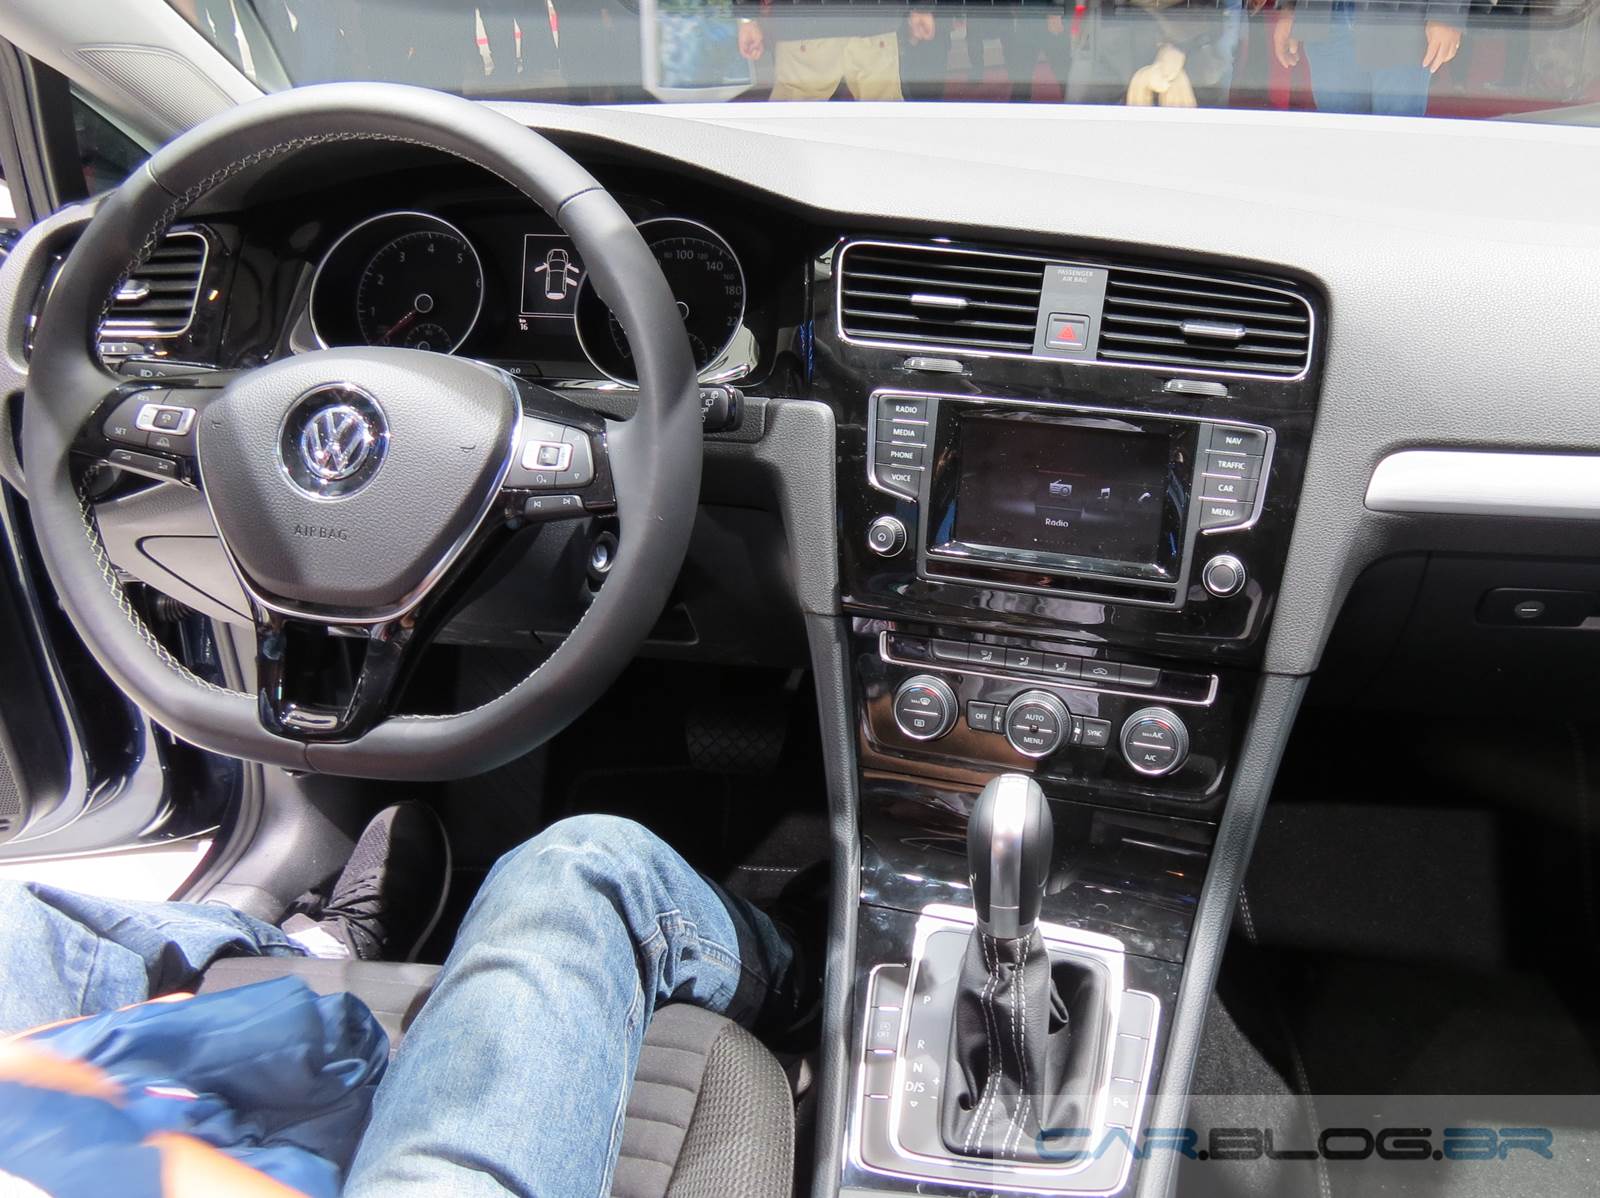 Volkswagen Golf CUP Edition - interior